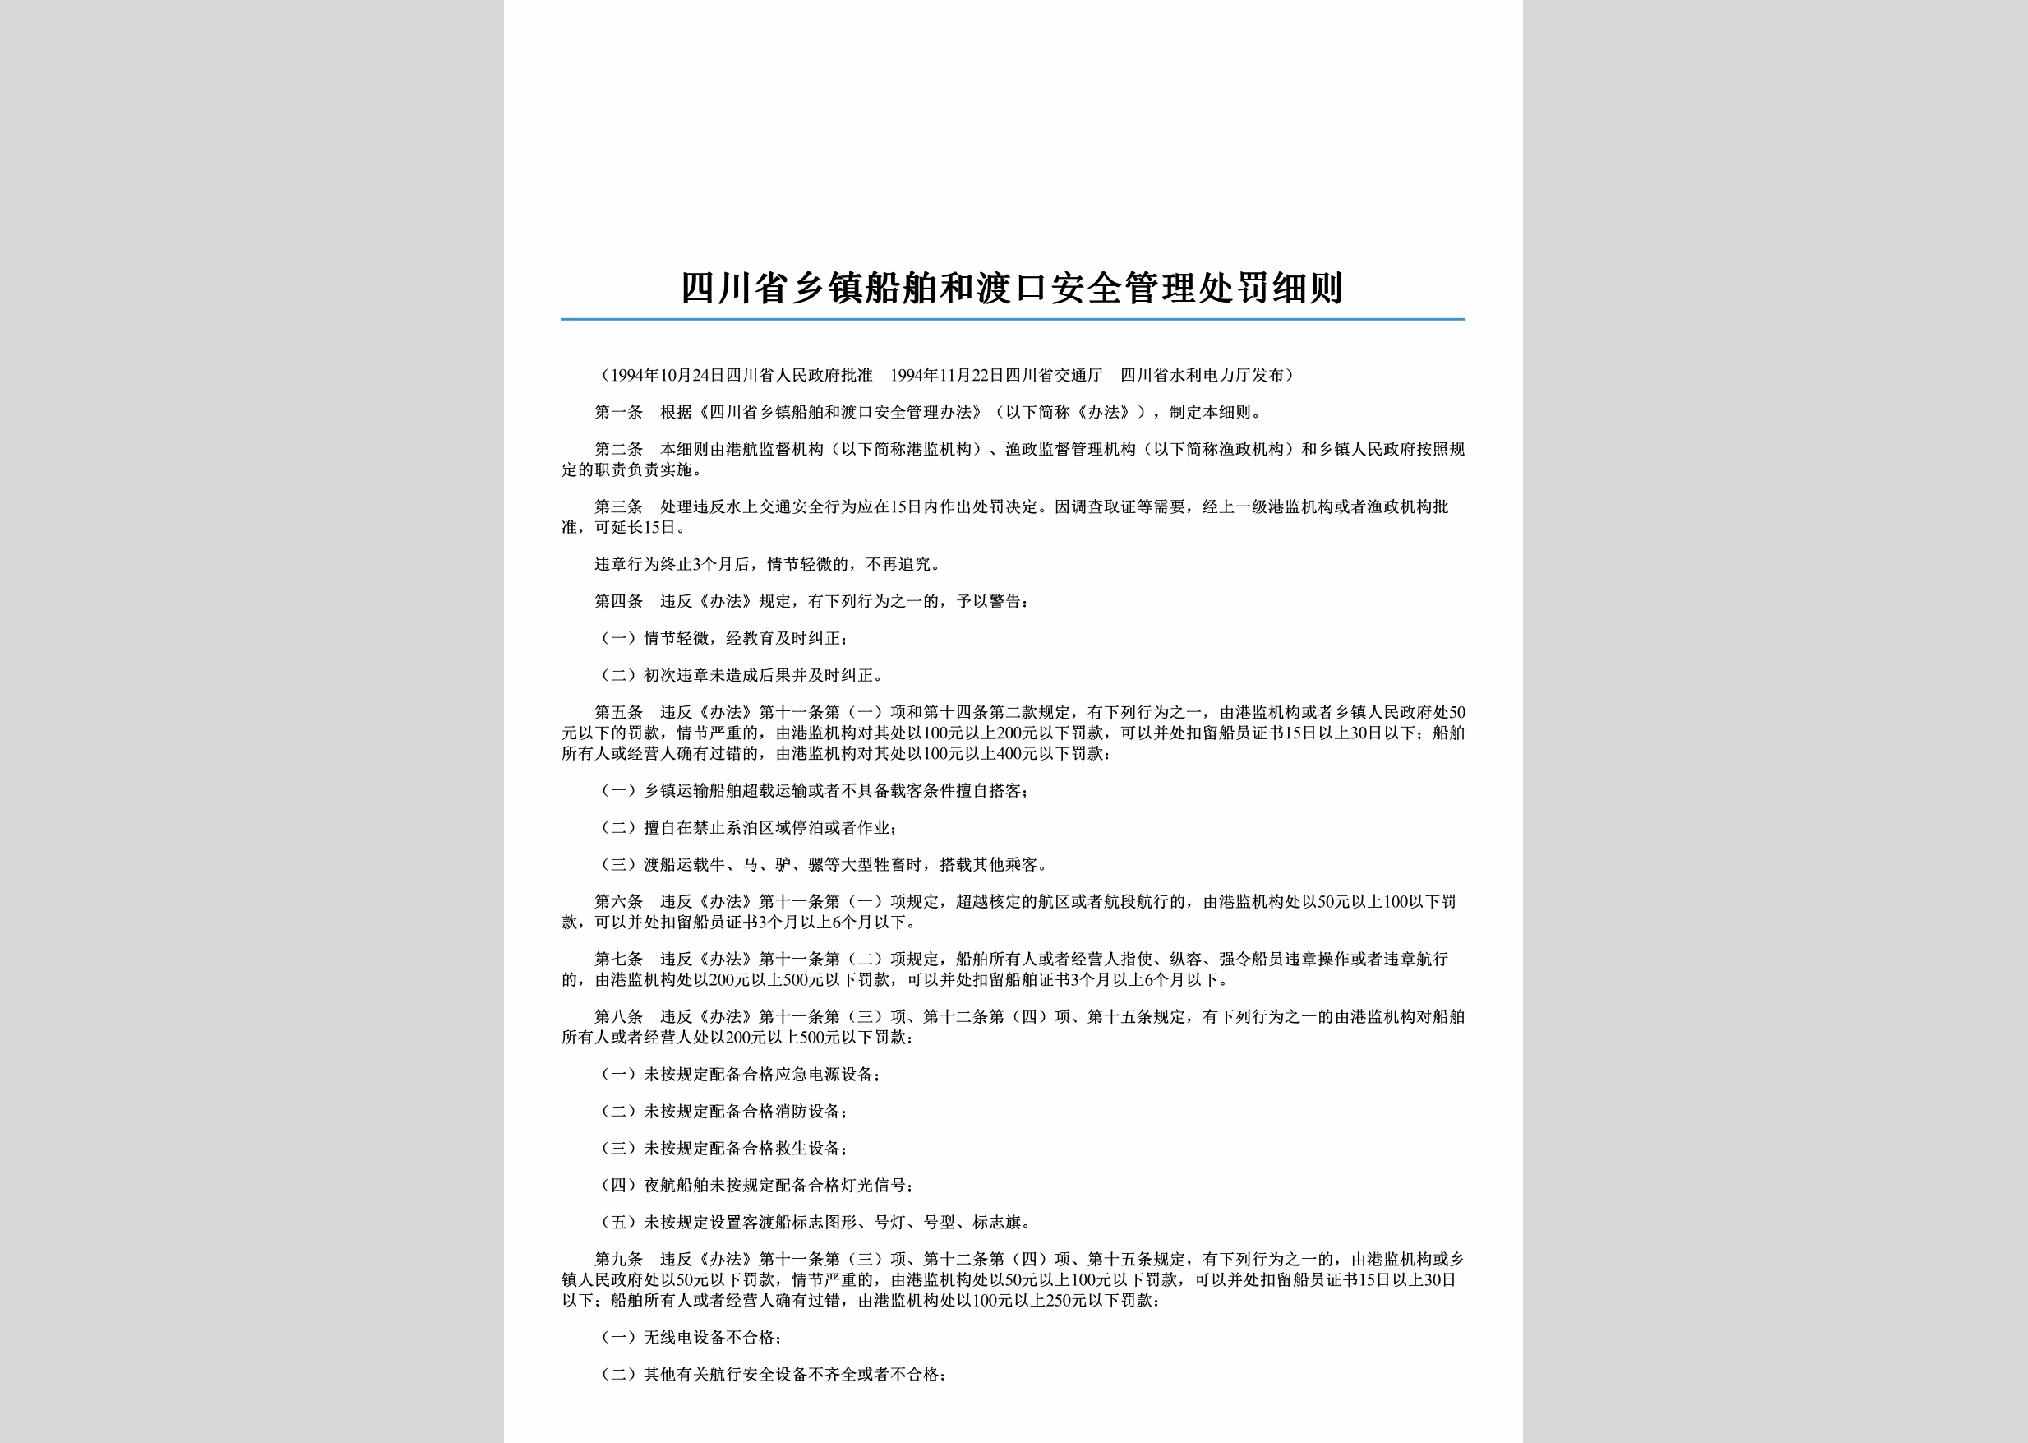 SC-CBDKGLXZ-2006：四川省乡镇船舶和渡口安全管理处罚细则